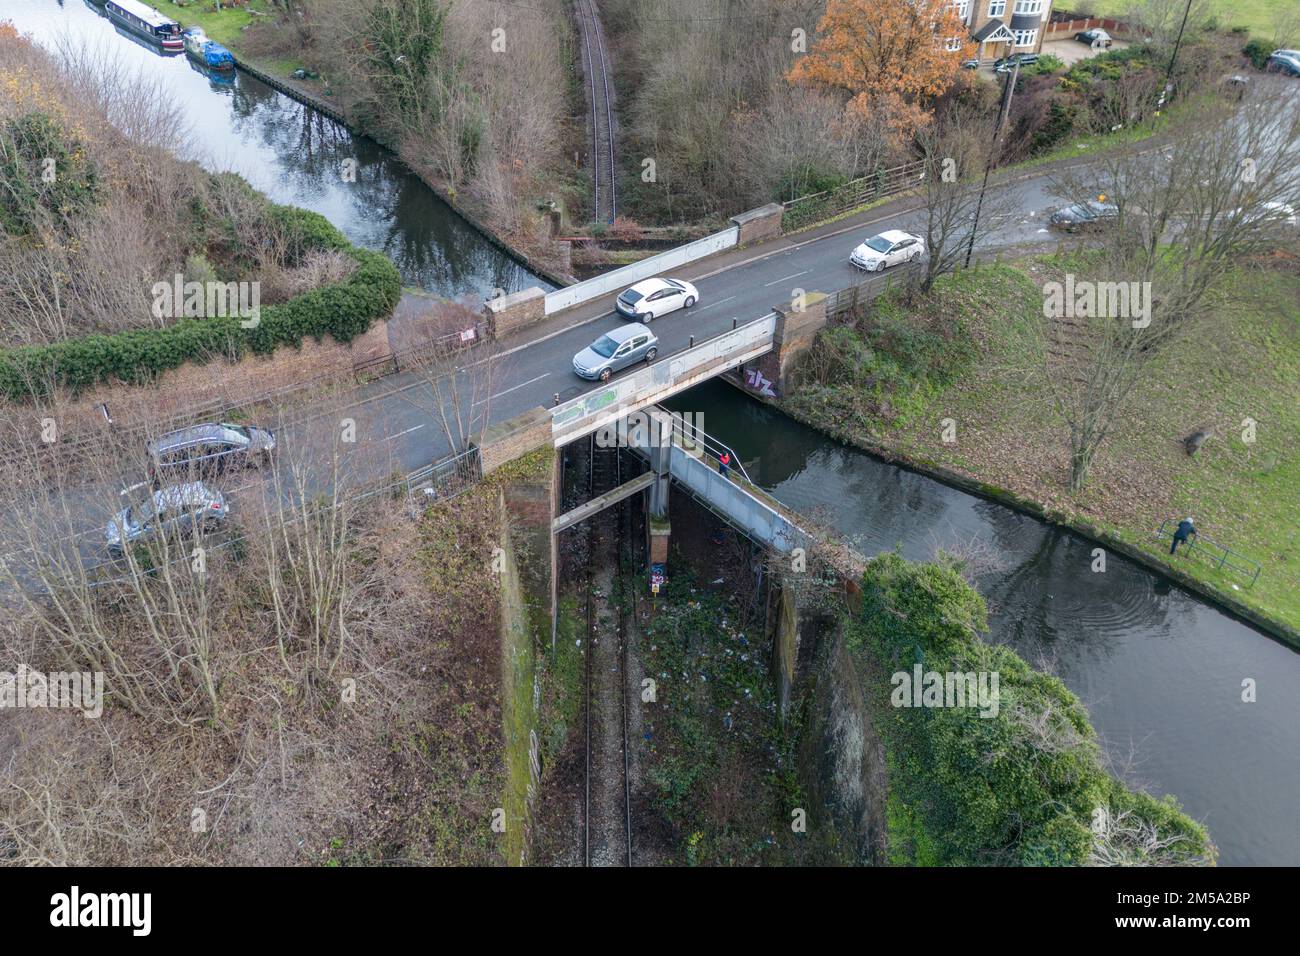 Three Bridges, properly known as Windmill Bridge, is a three-level crossing of bridges near Hanwell in west London, UK. Stock Photo